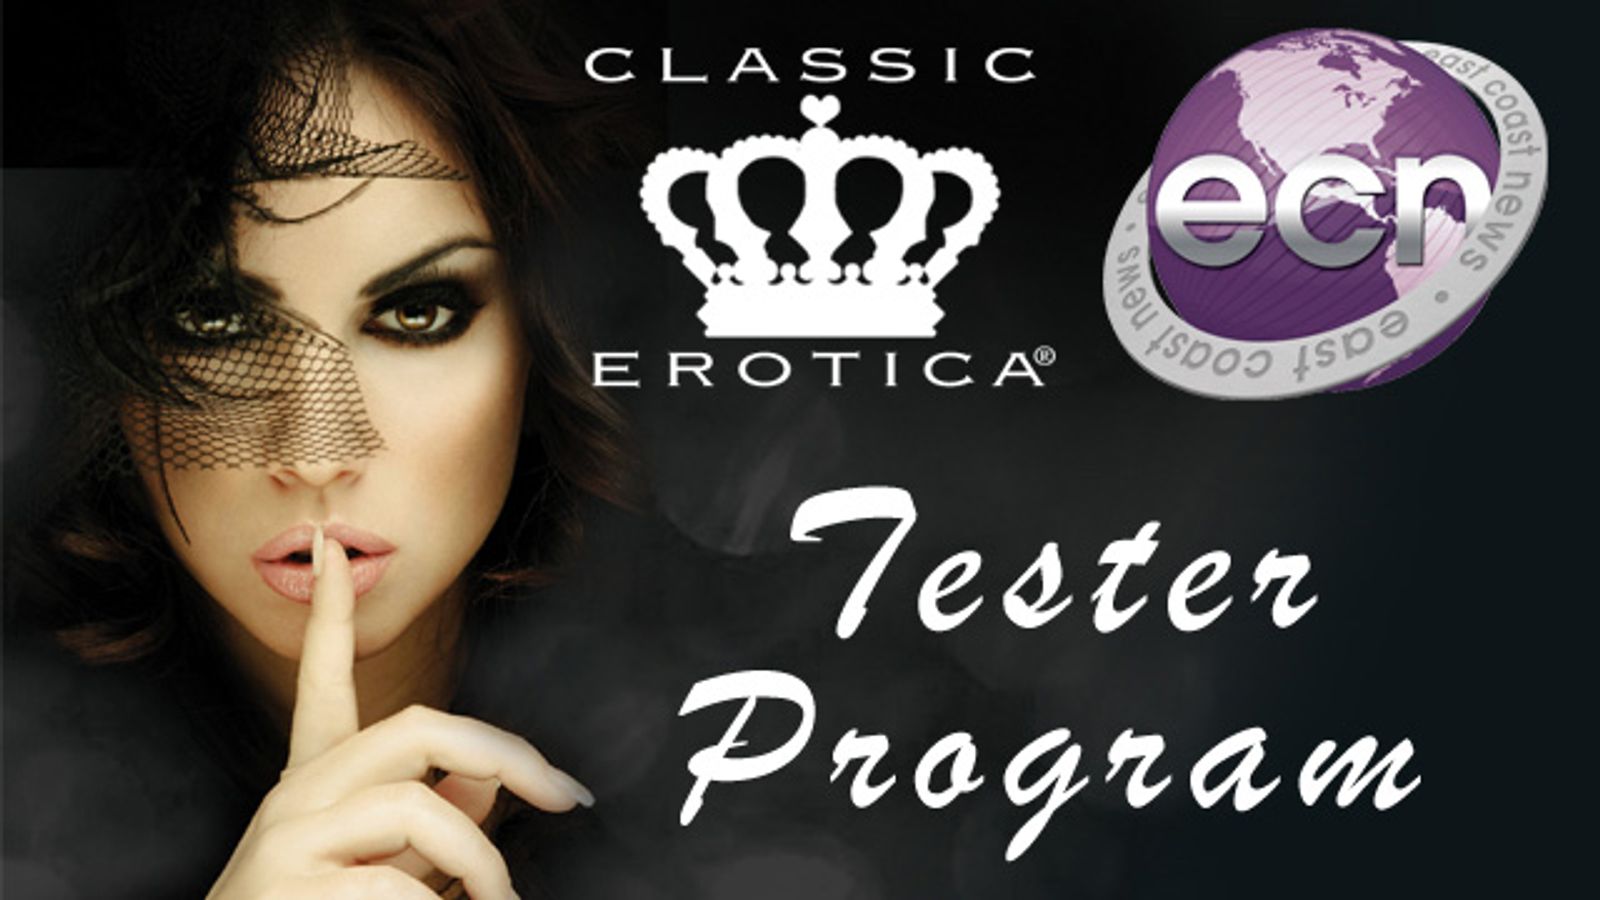 East Coast News Introduces Classic Erotica Tester Program